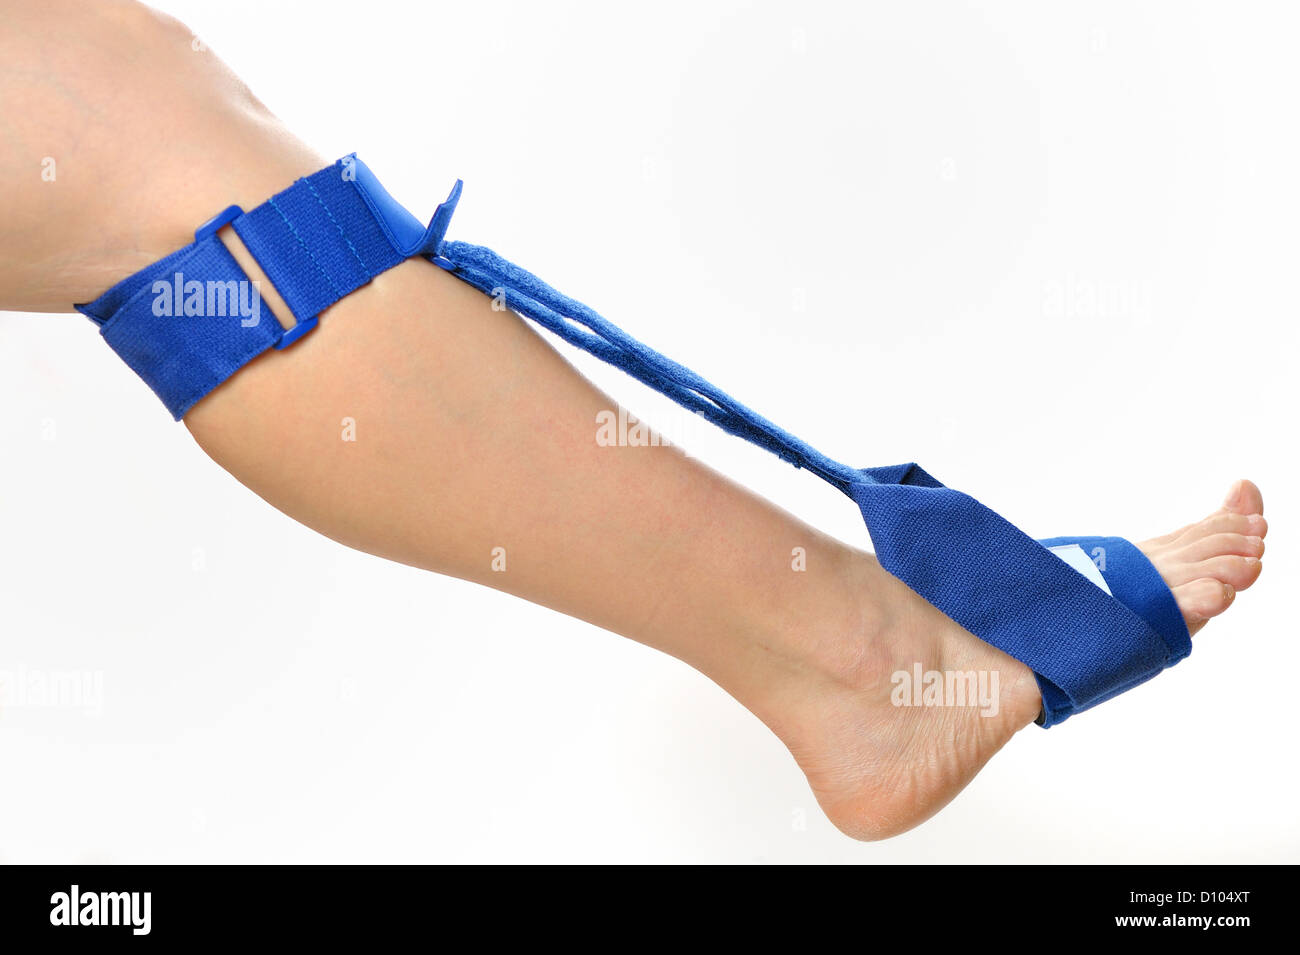 File:Orthopedic leg braces - adolescent female patient 3.jpg